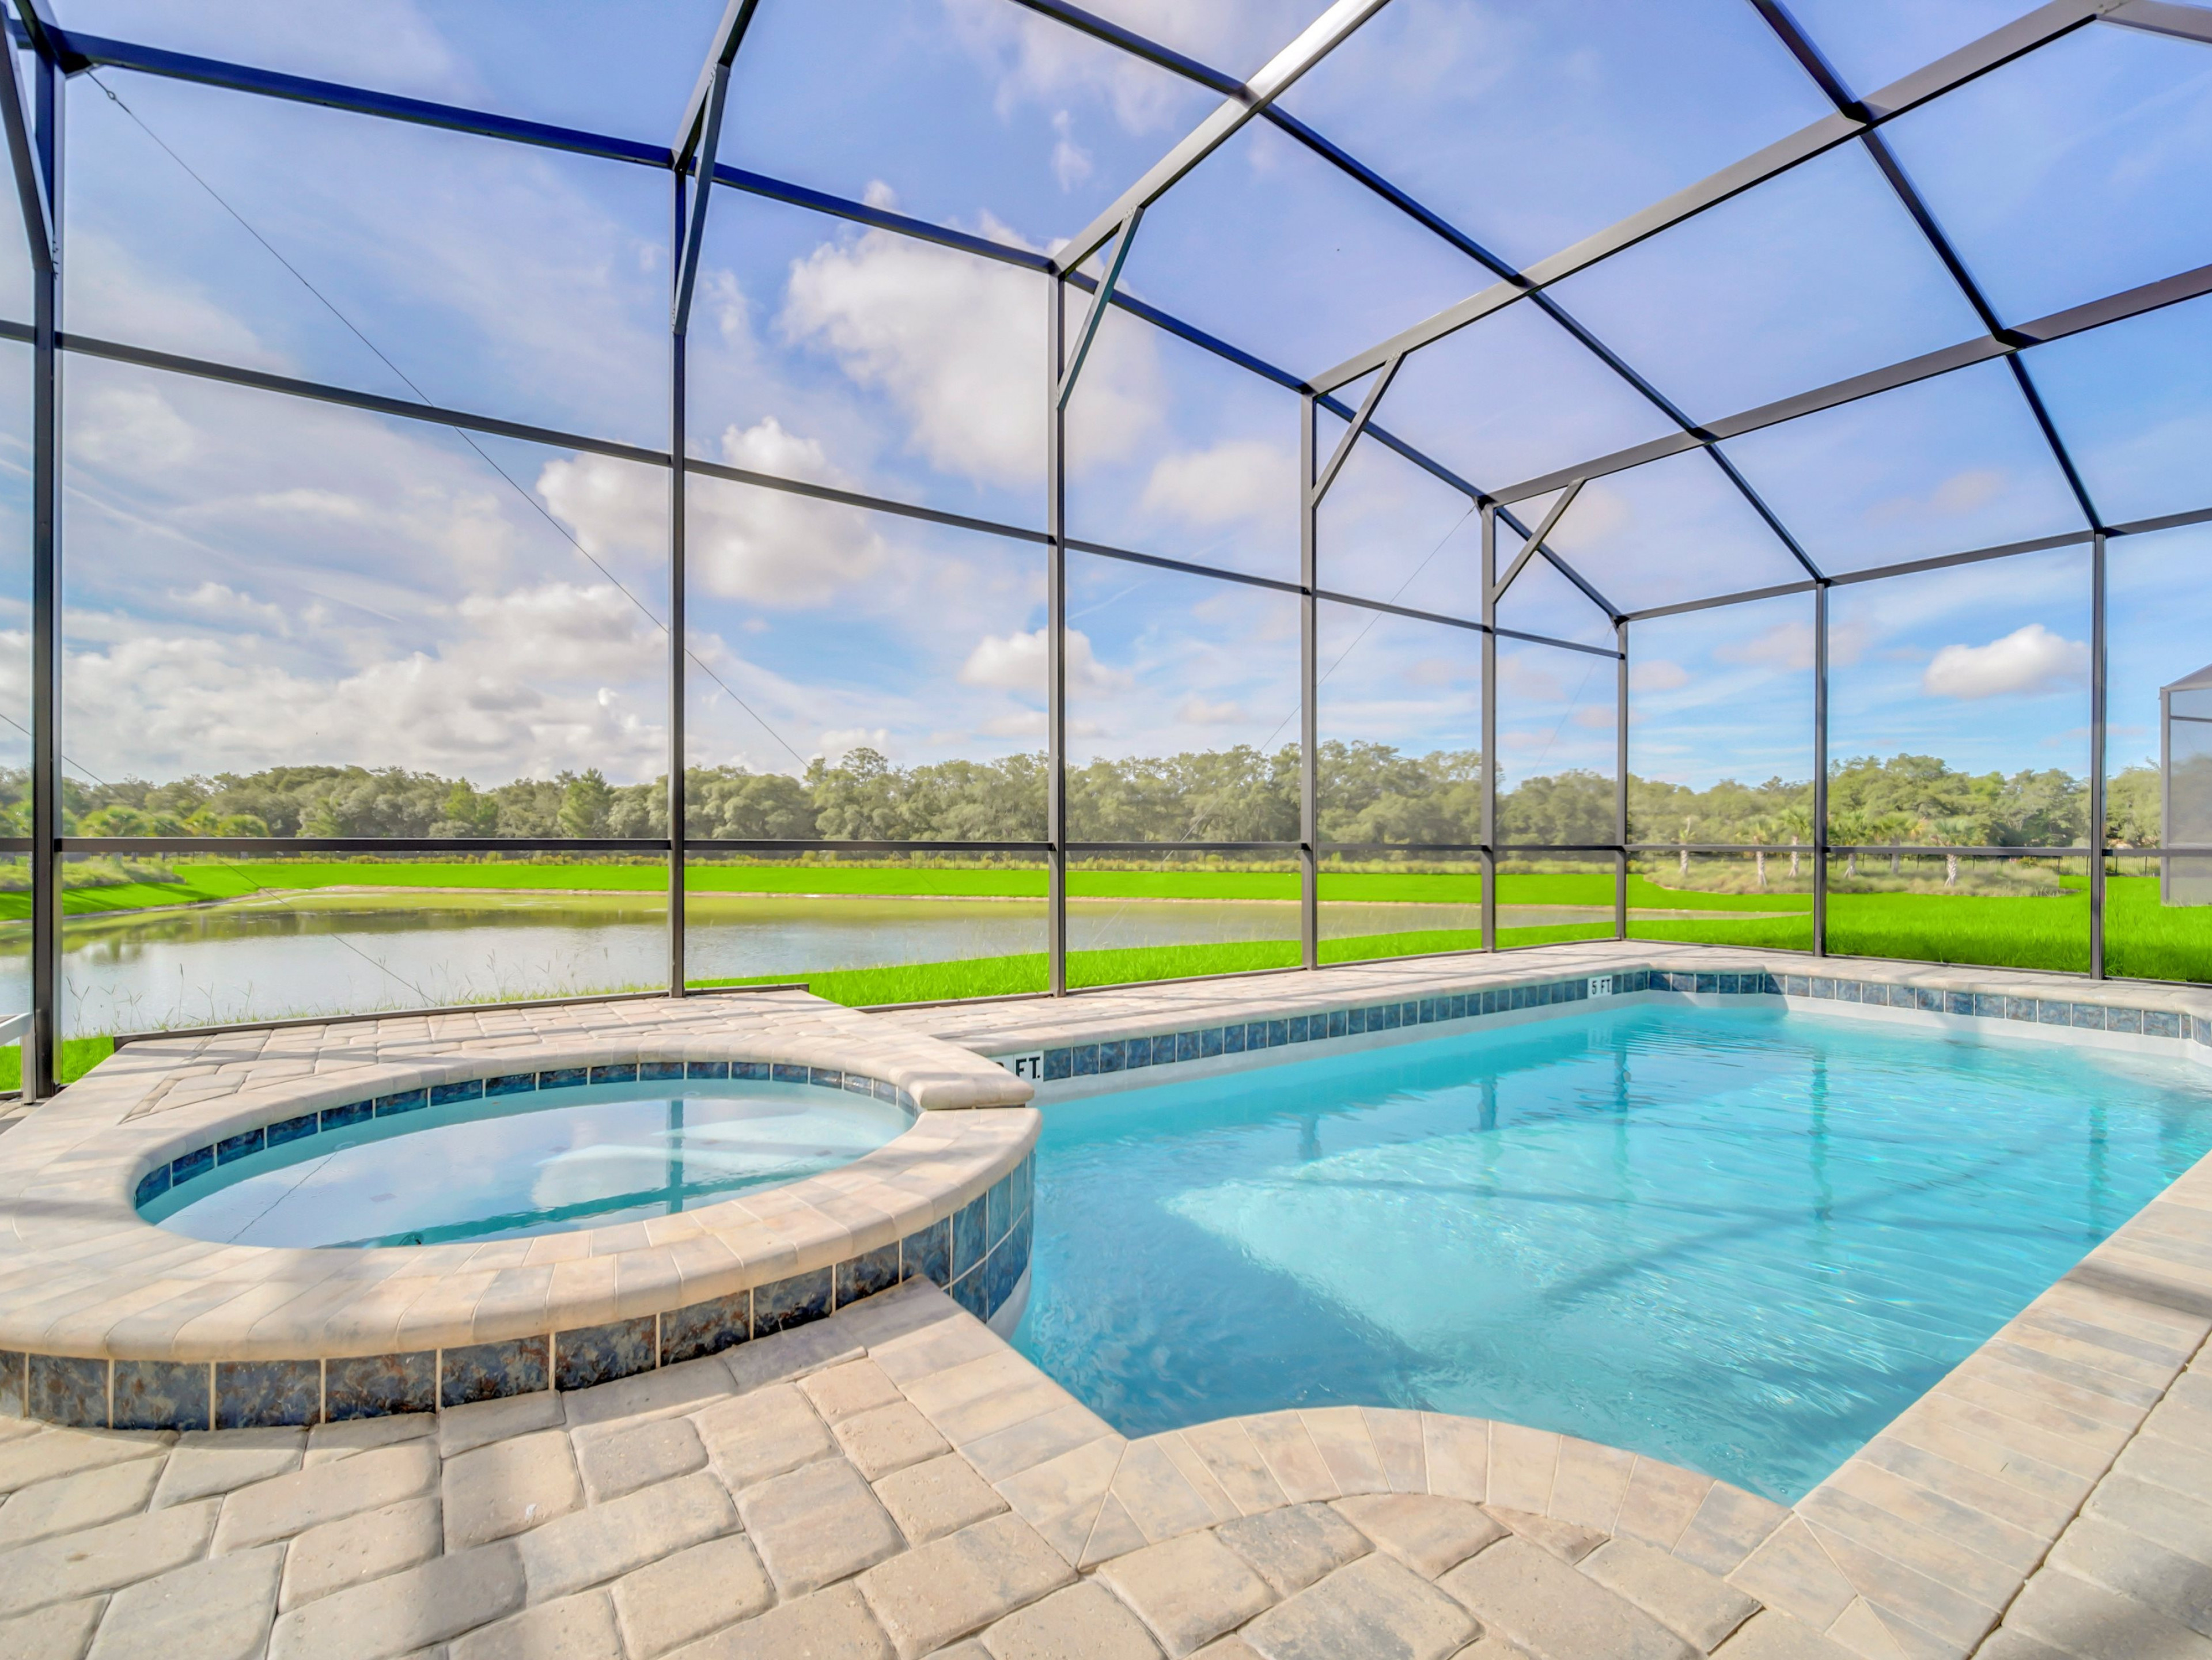 Solara Resort 439 Orlando vacation home rentals with private pool near Universal Studios